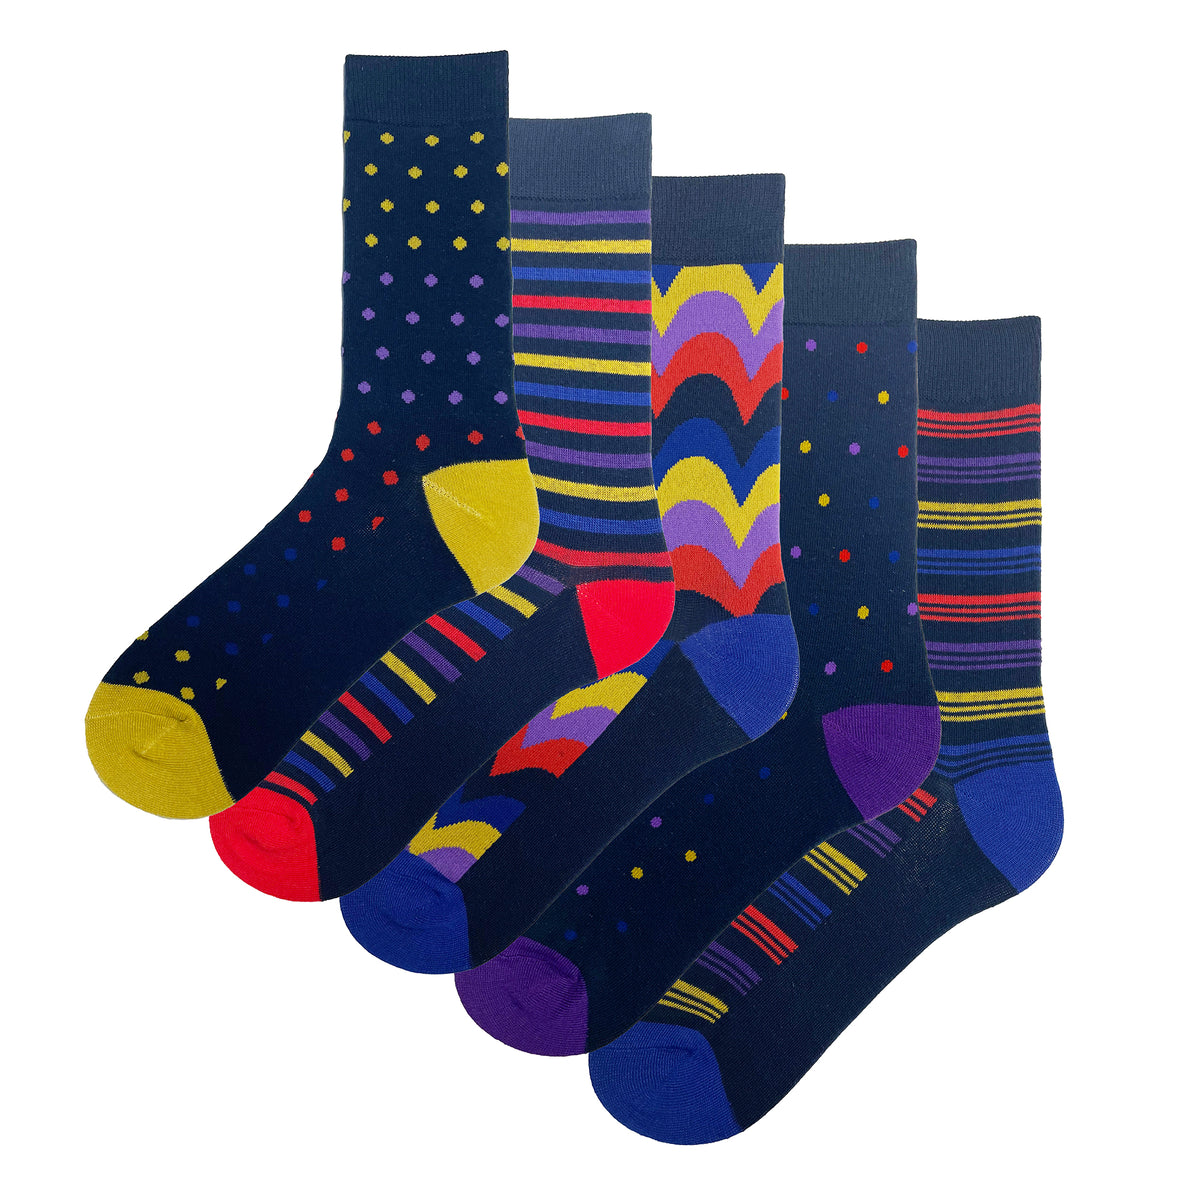 Mens Navy Dots/Stripes Socks 5 Pack